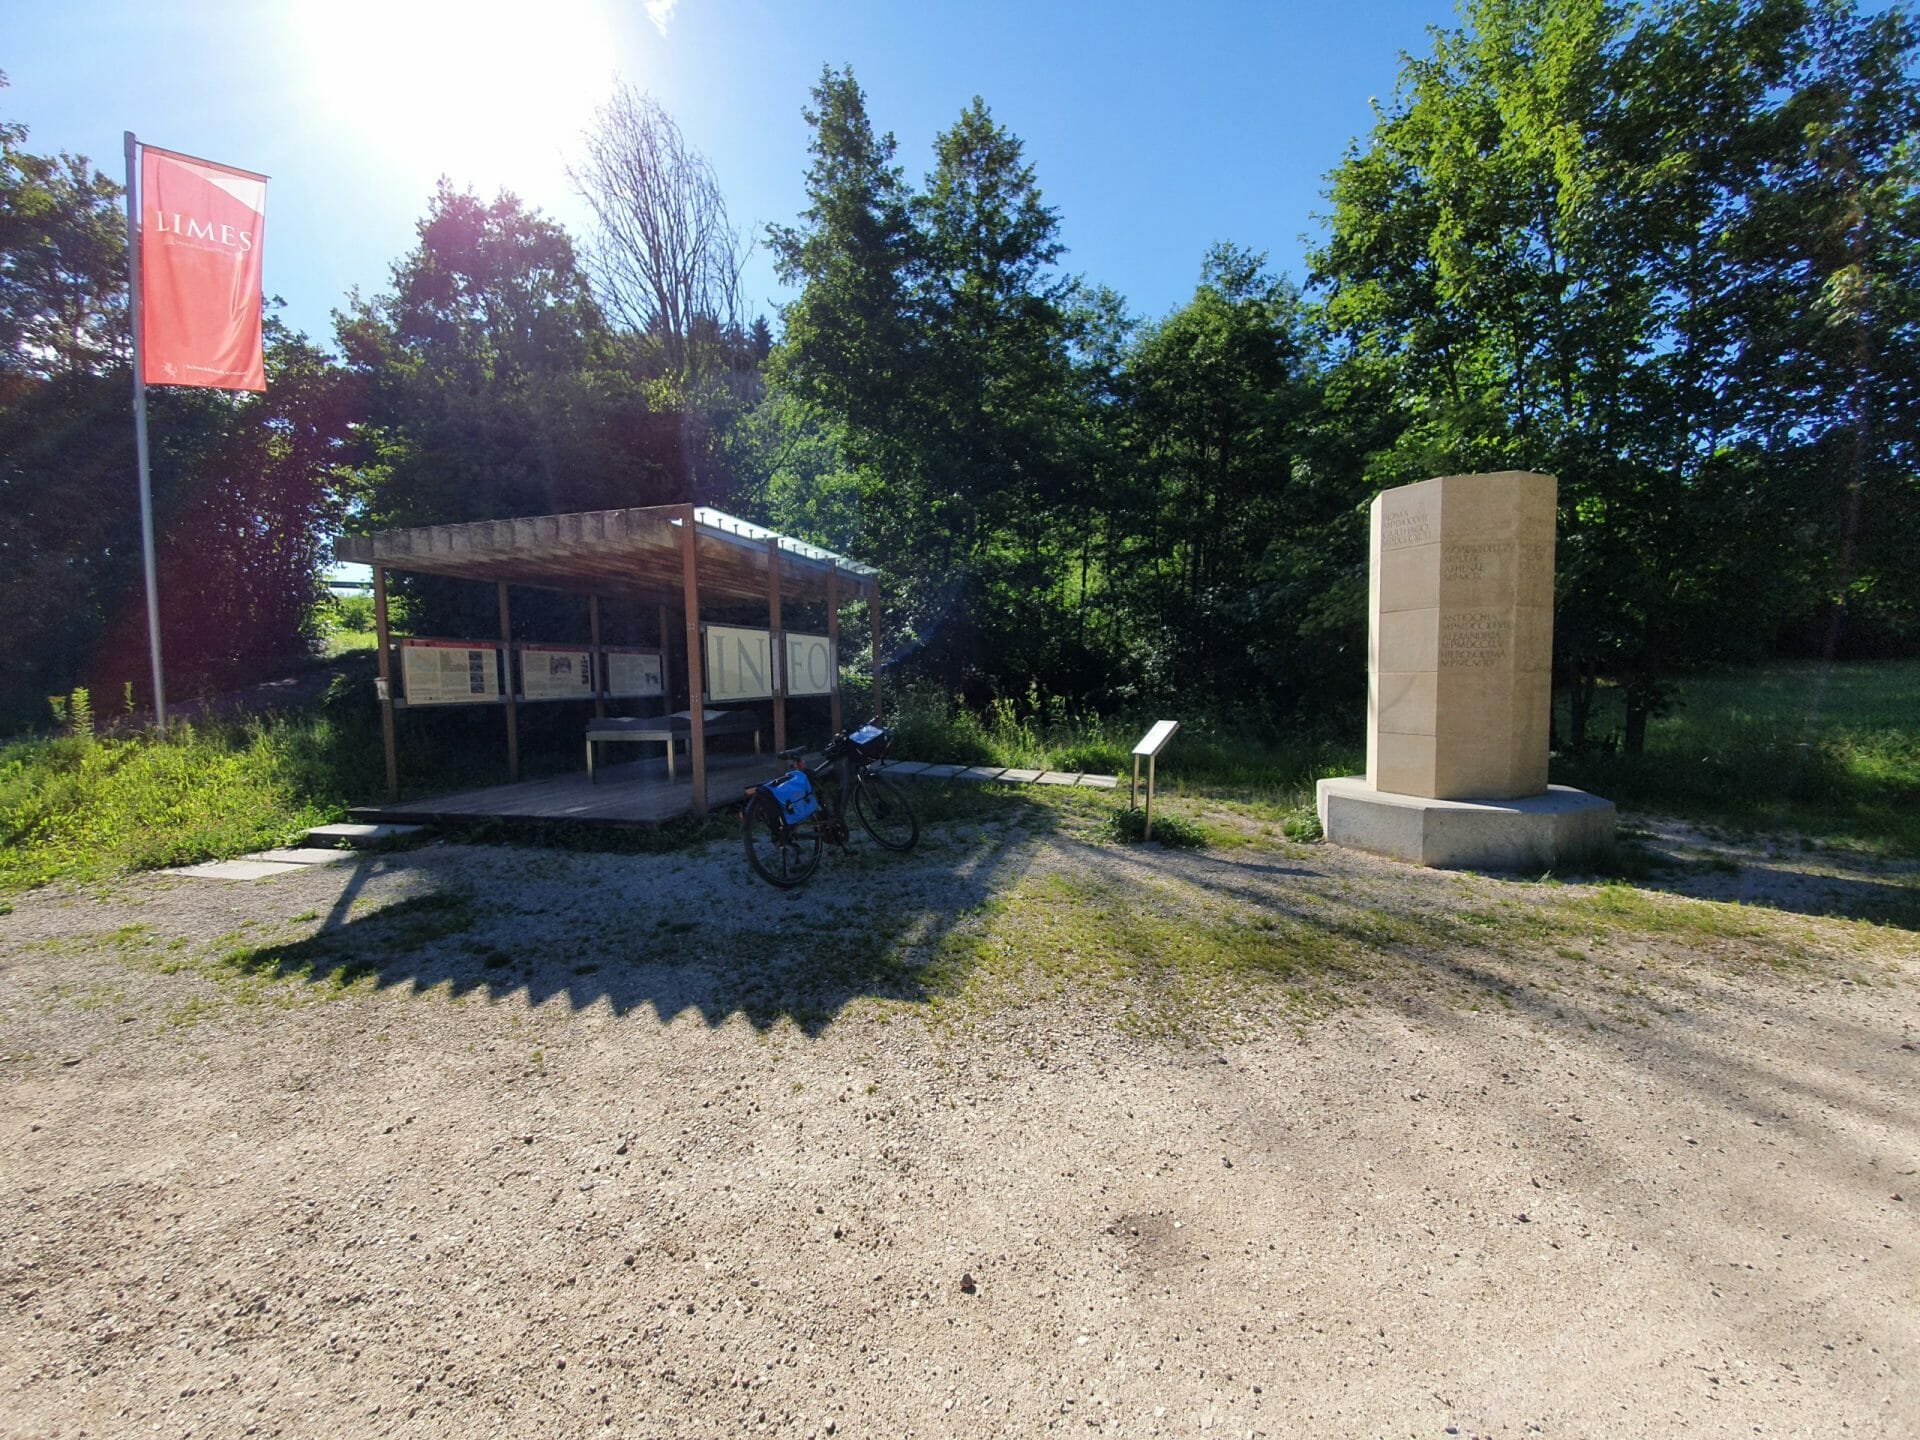 Limespavillon Rotenbachtal